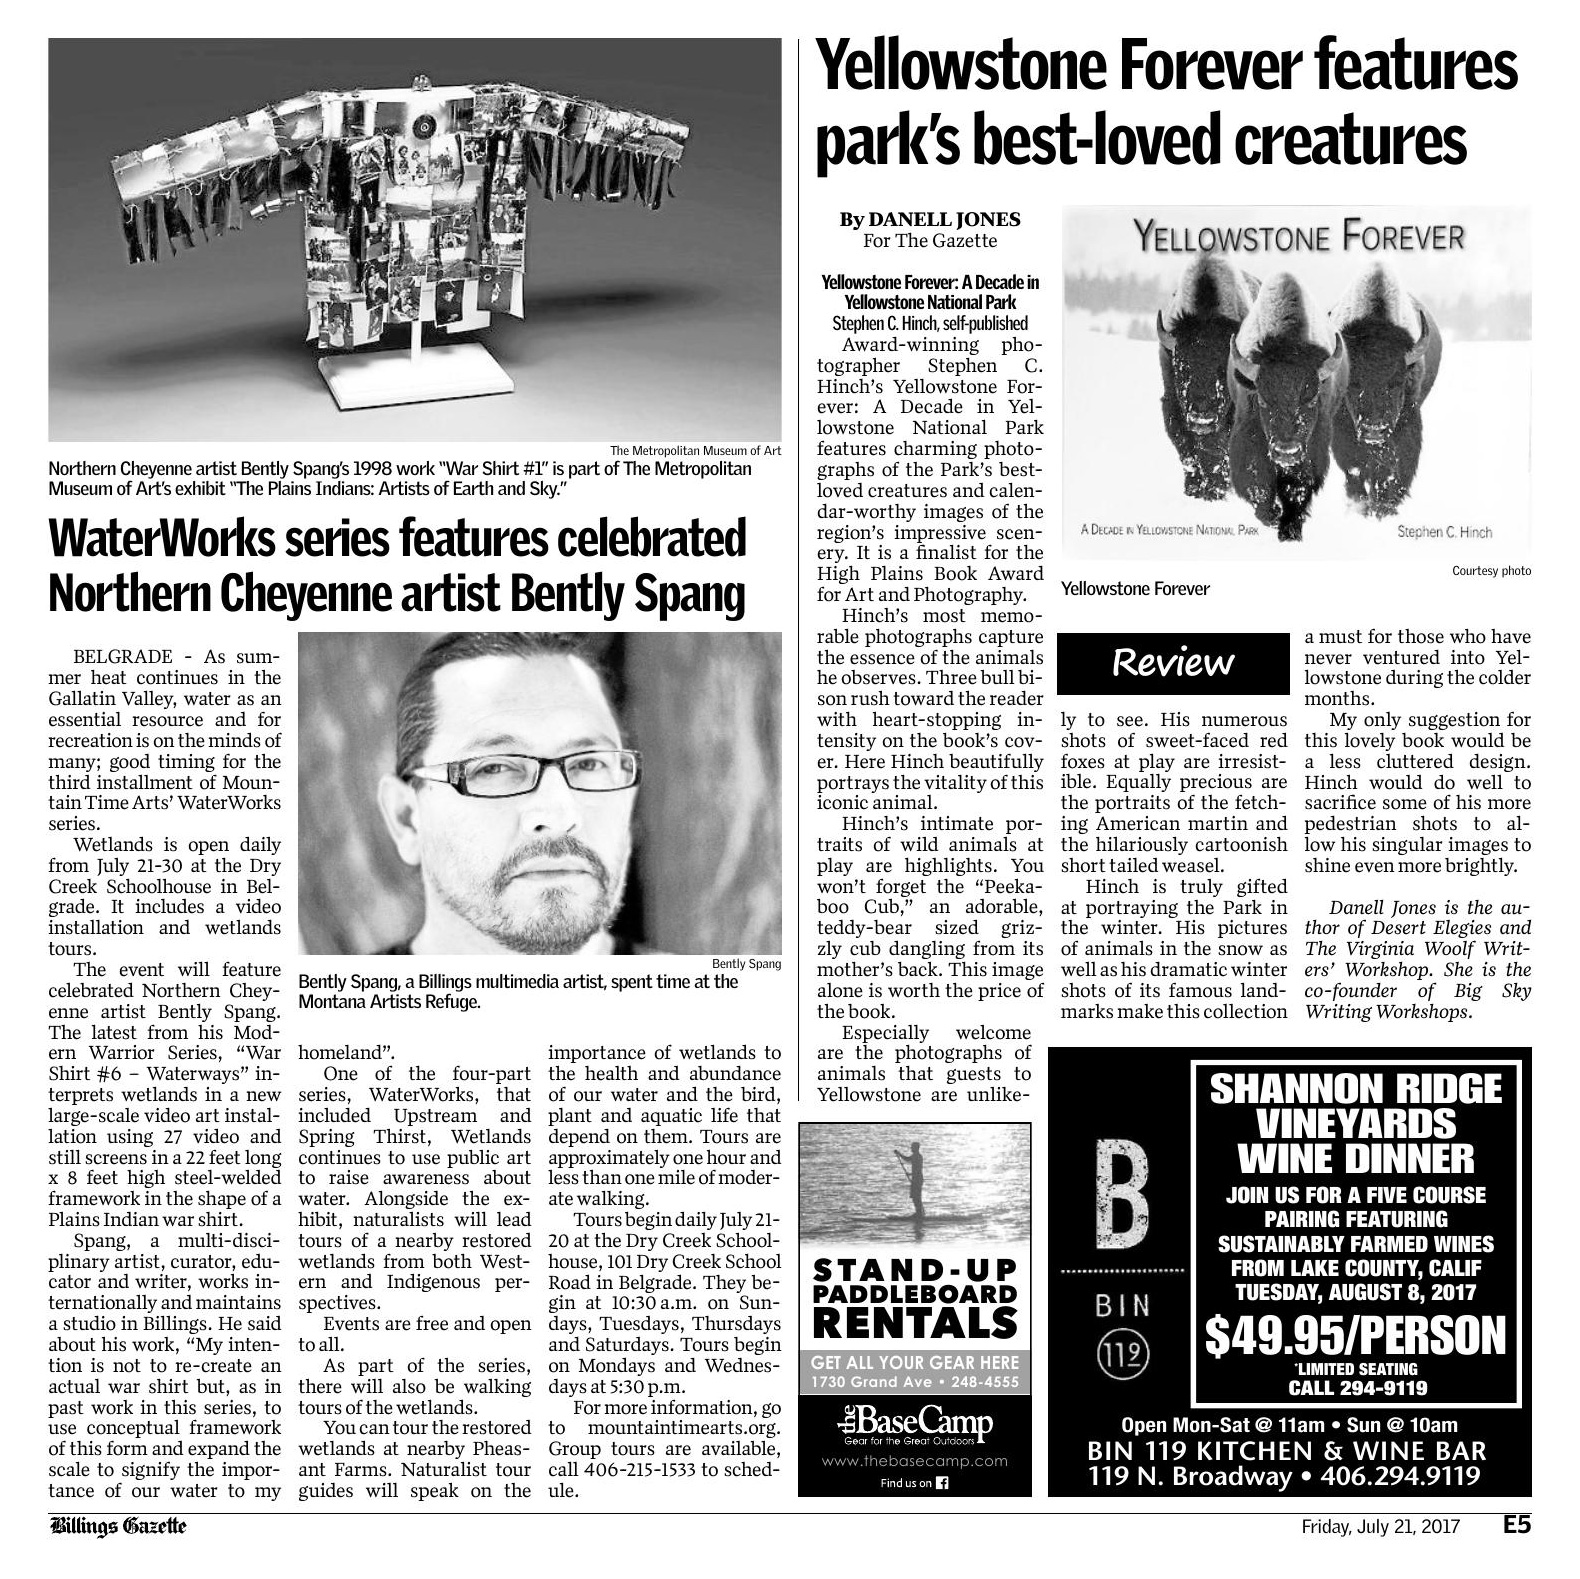 Billings Gazette, July 2017: WaterWorks Series features celebrated Northern Cheyenne artist Bently Spang